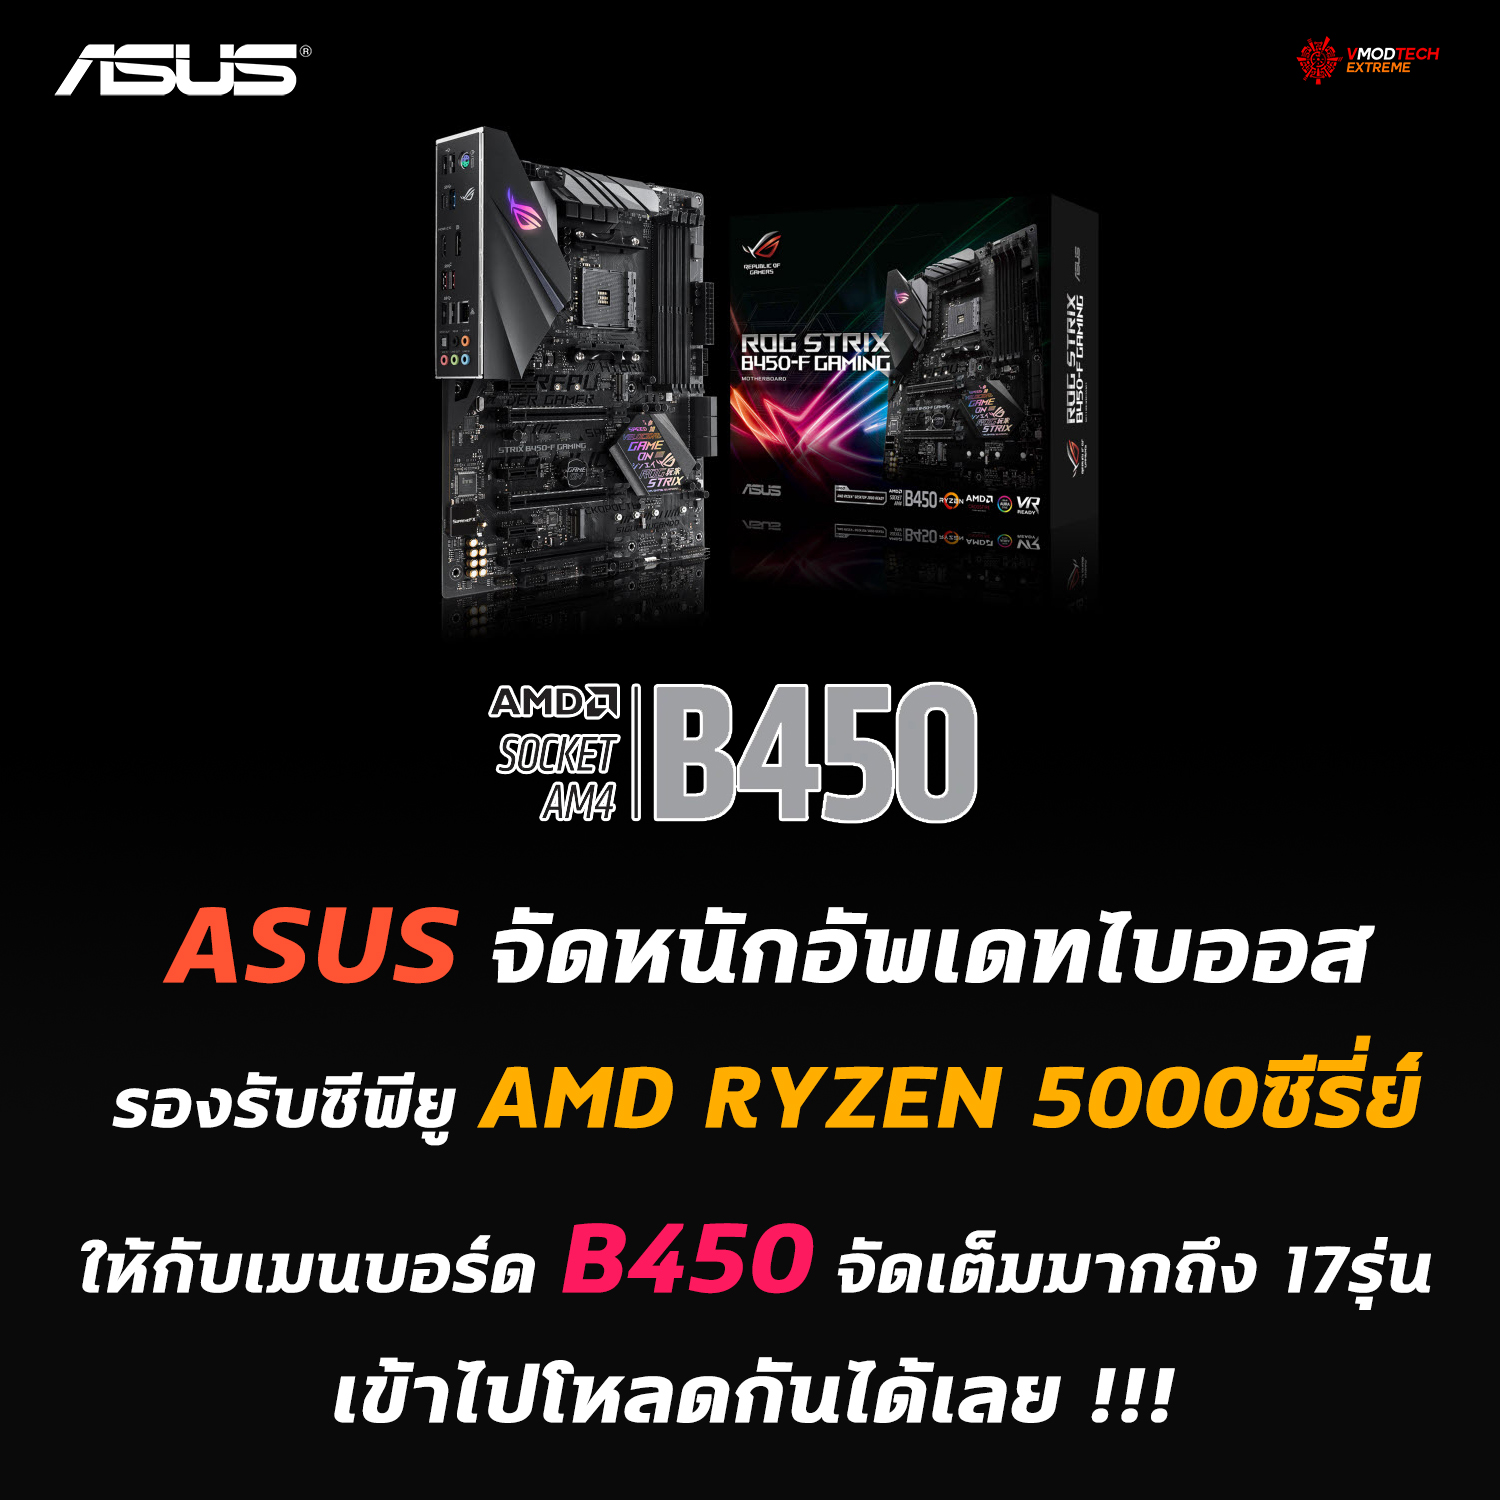 asus b450 bios update zen3 ASUS จัดหนักอัพเดทไบออสรองรับซีพียู AMD RYZEN 5000ซีรี่ย์ให้กับเมนบอร์ด B450 แบบจัดเต็ม เข้าไปโหลดกันได้เลย!!! 